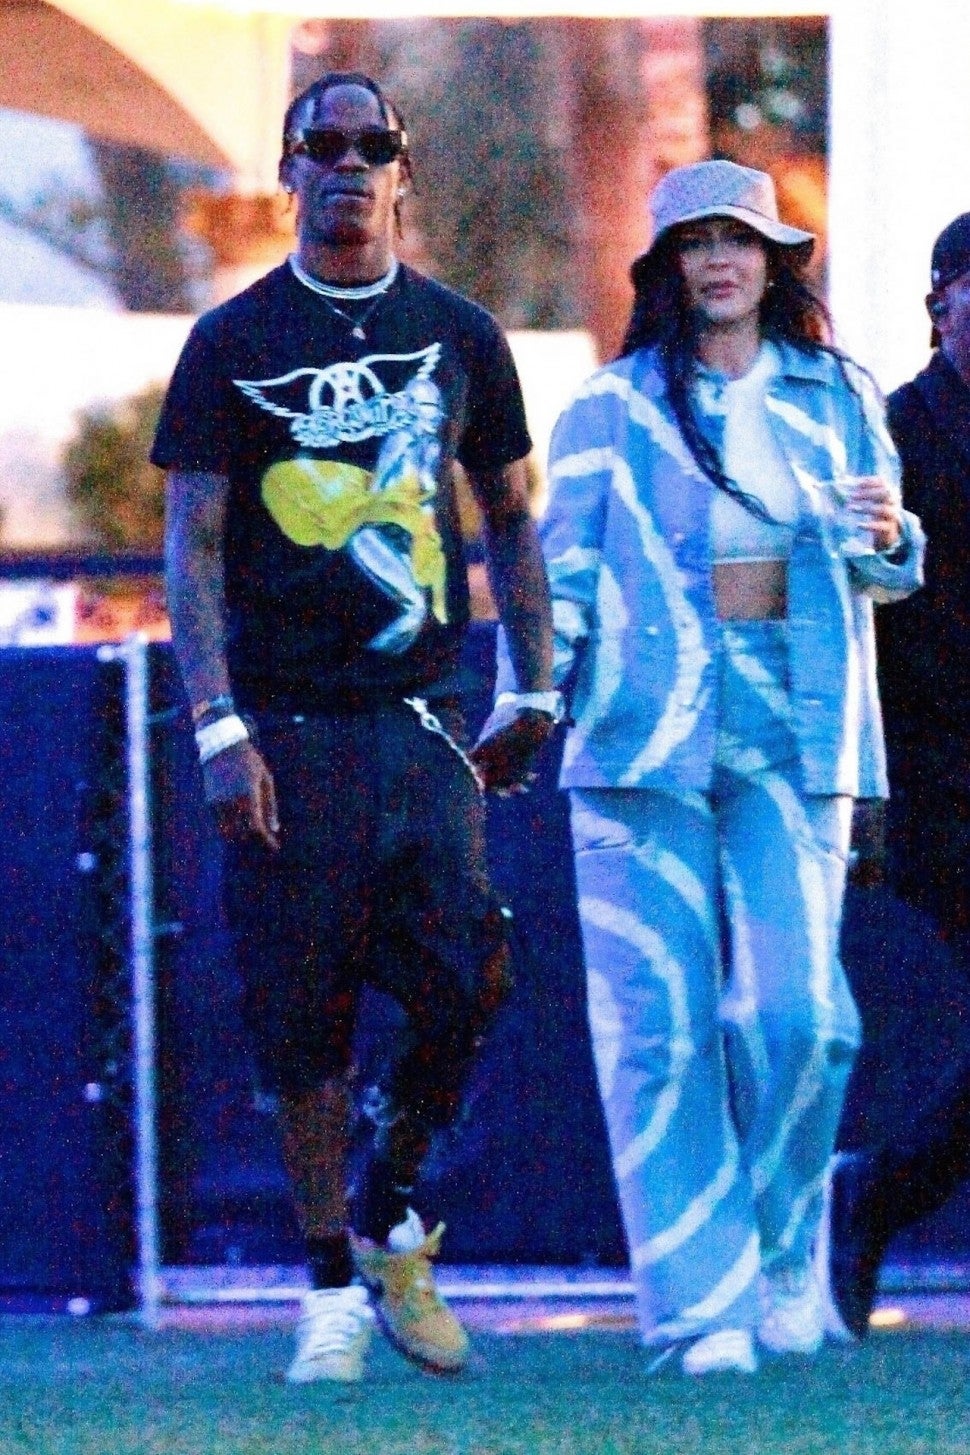 Travis Scott and Kylie Jenner at Coachella